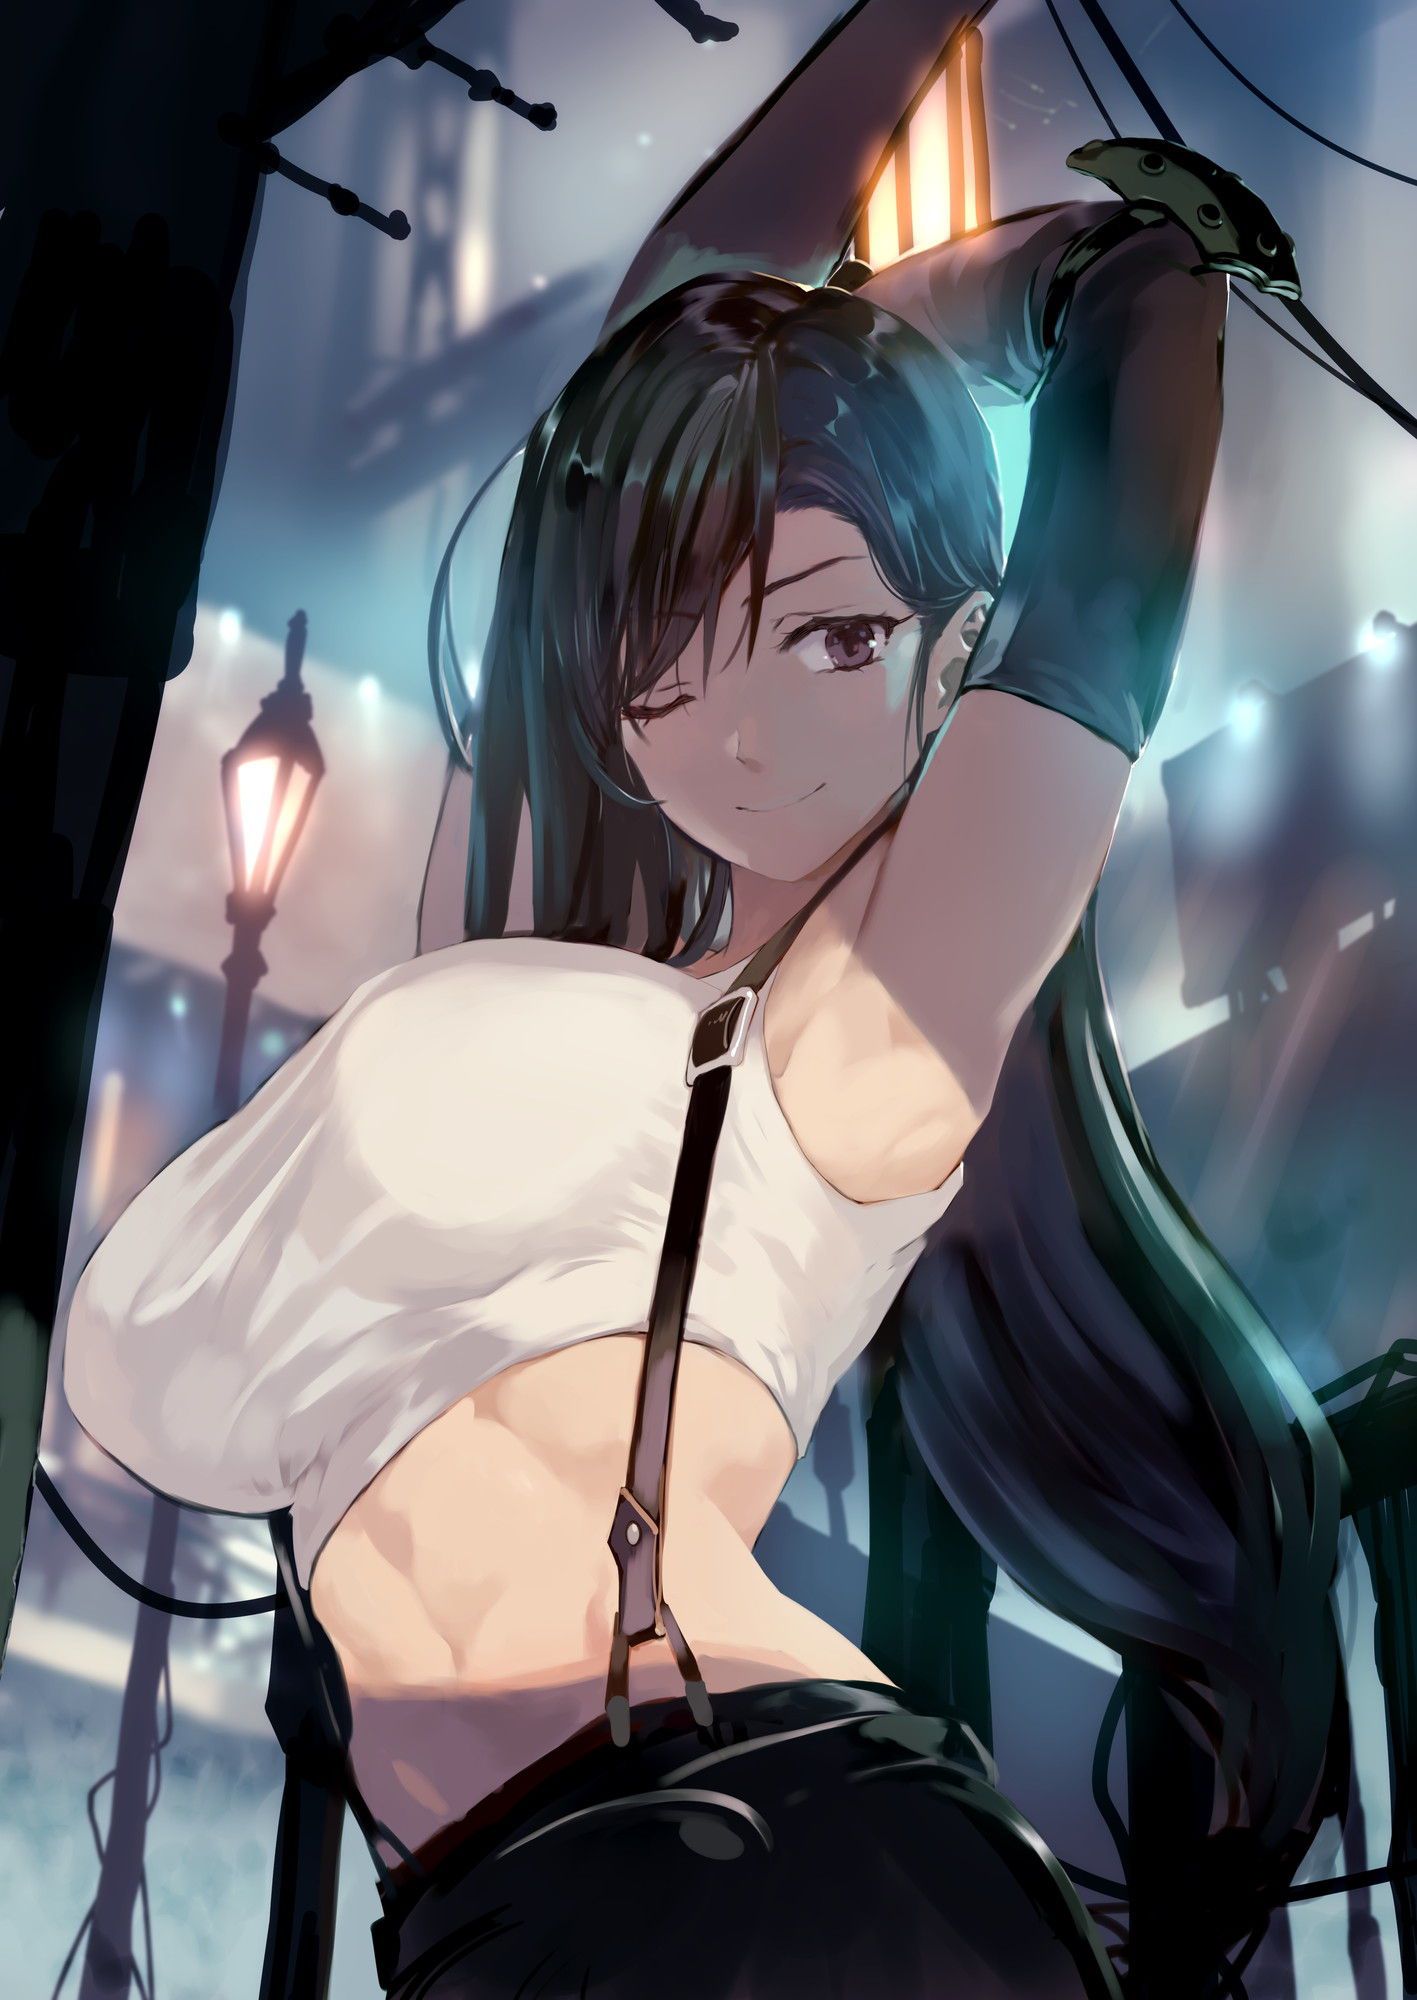 Tiffa Lockhart's throat erotic secondary erotic images are full of boobs! 【Final Fantasy】 14